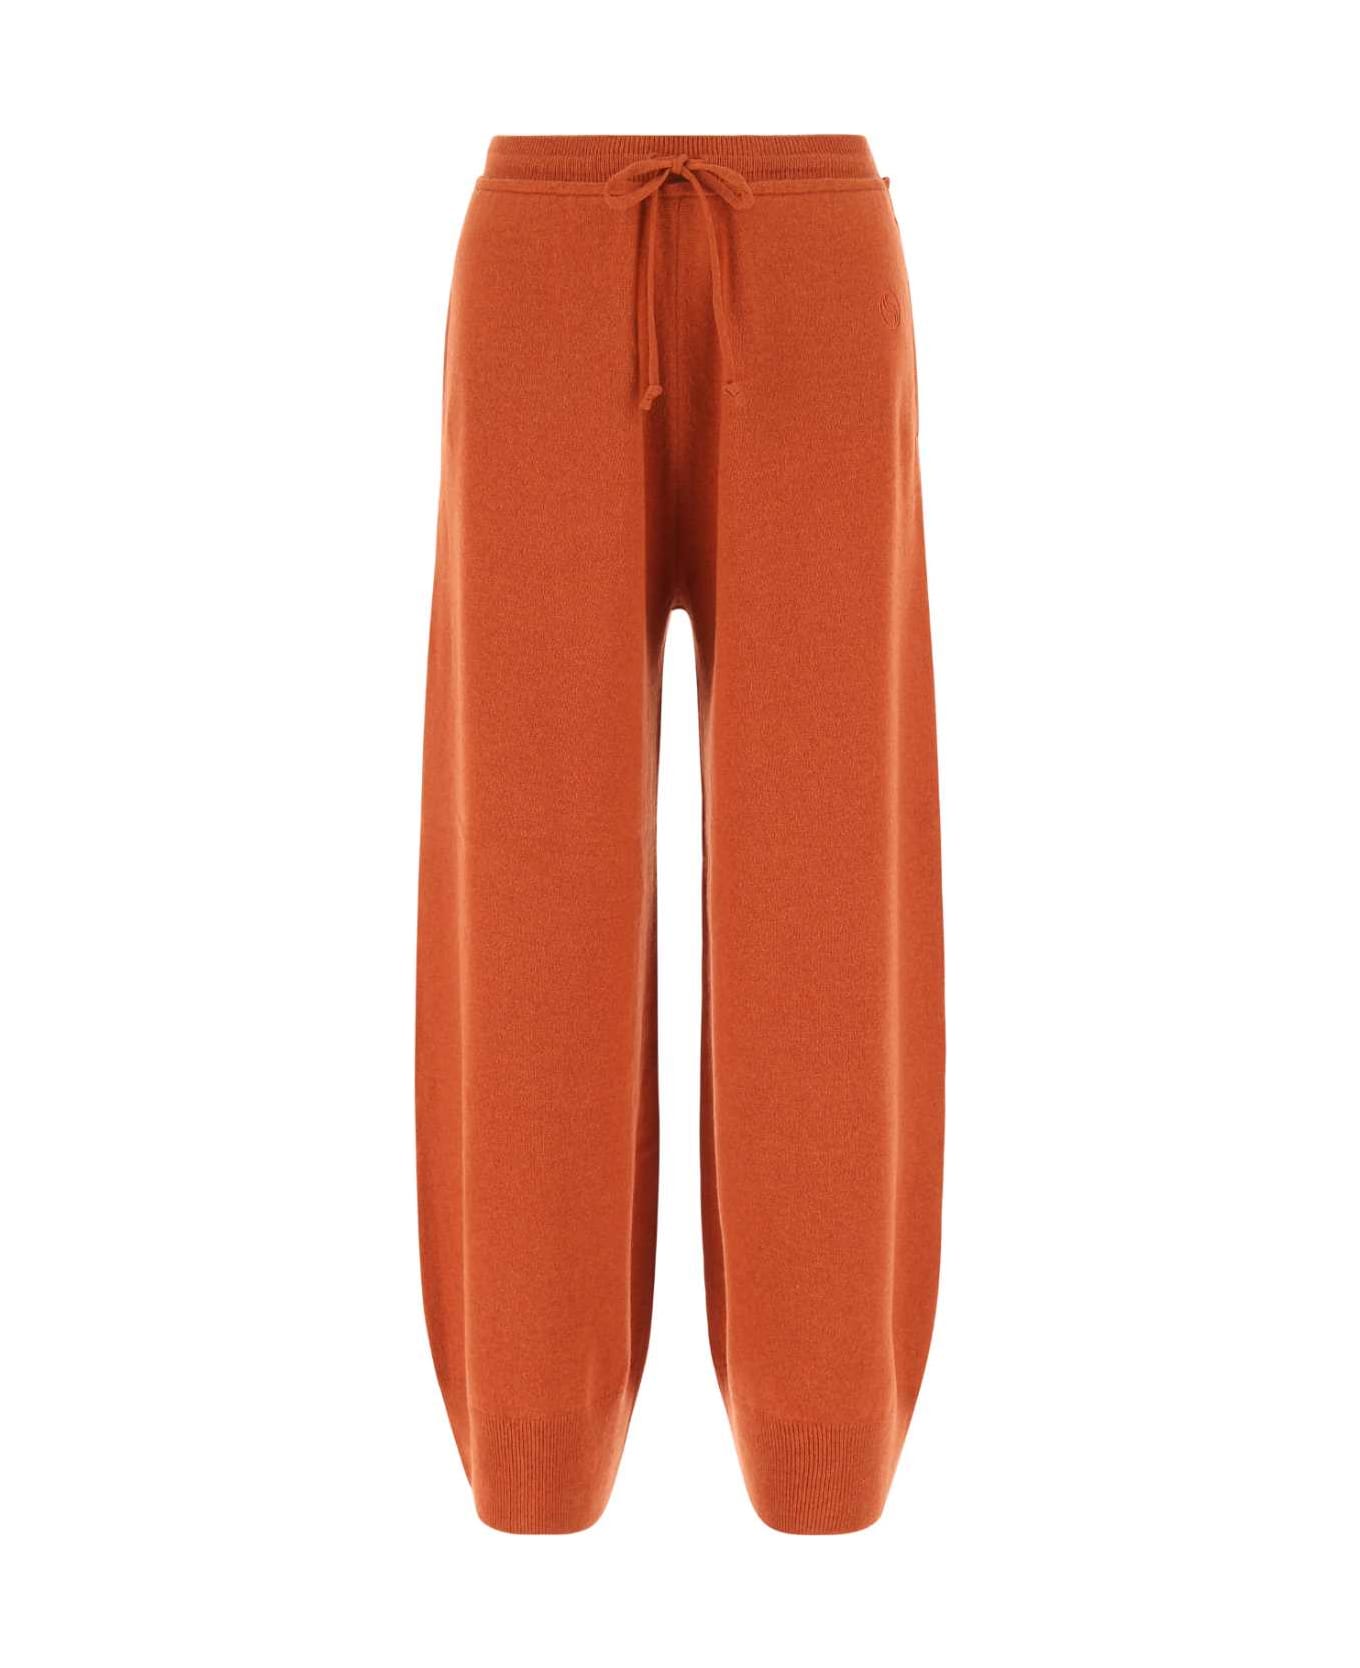 Stella McCartney Copper Cashmere Blend Wide-leg Pant - 6302